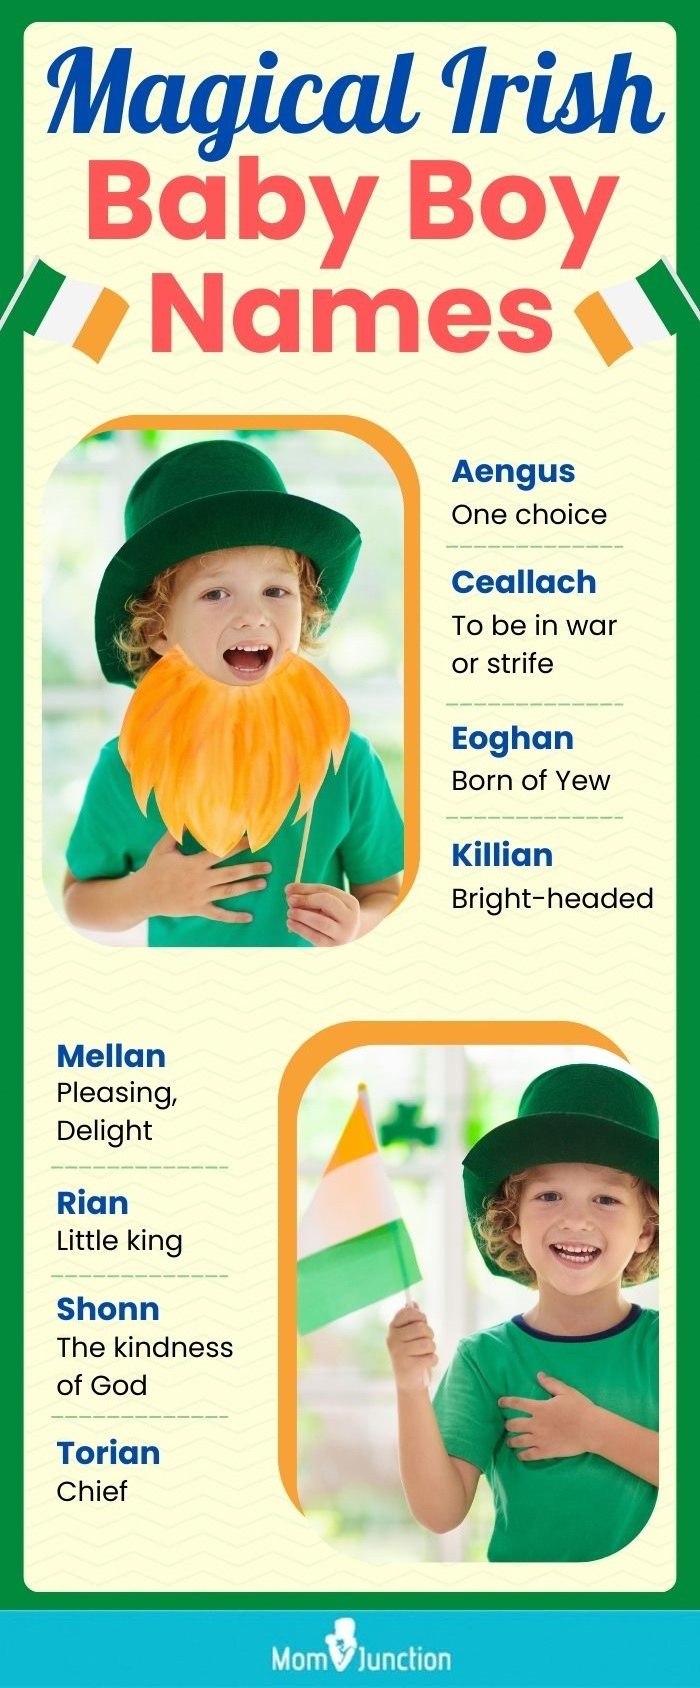 magical irish baby boy names (infographic)